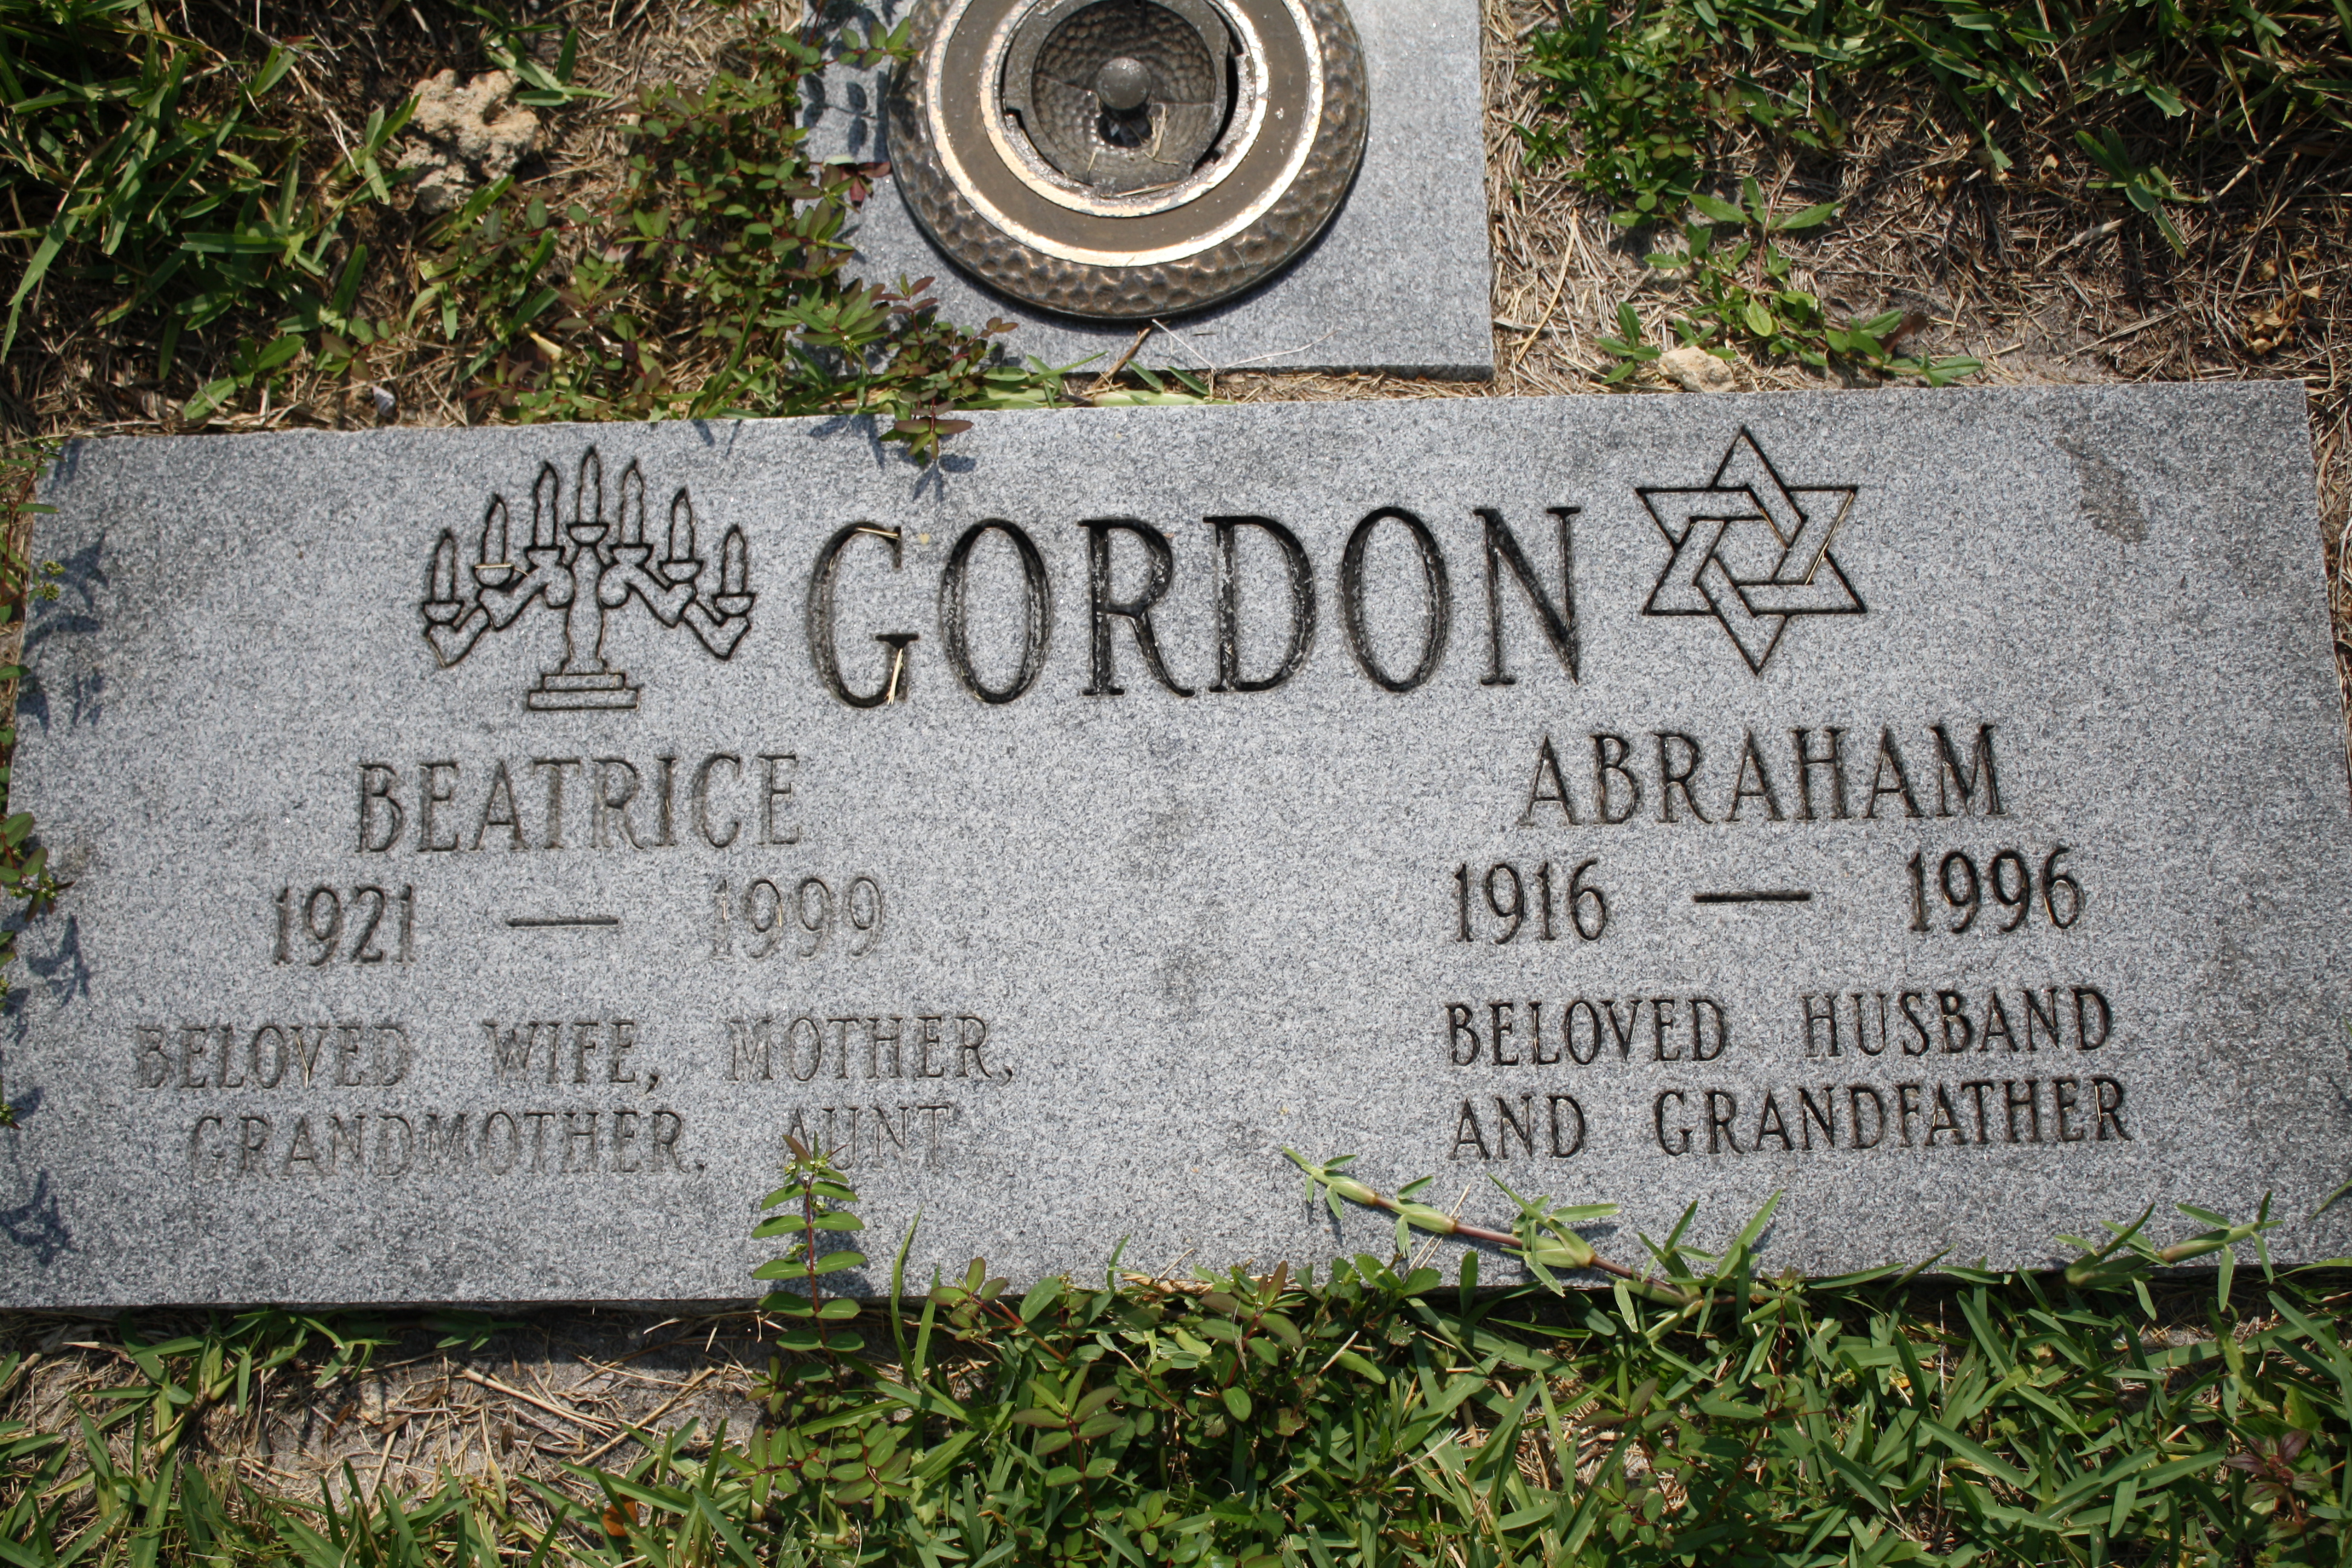 Abraham Gordon